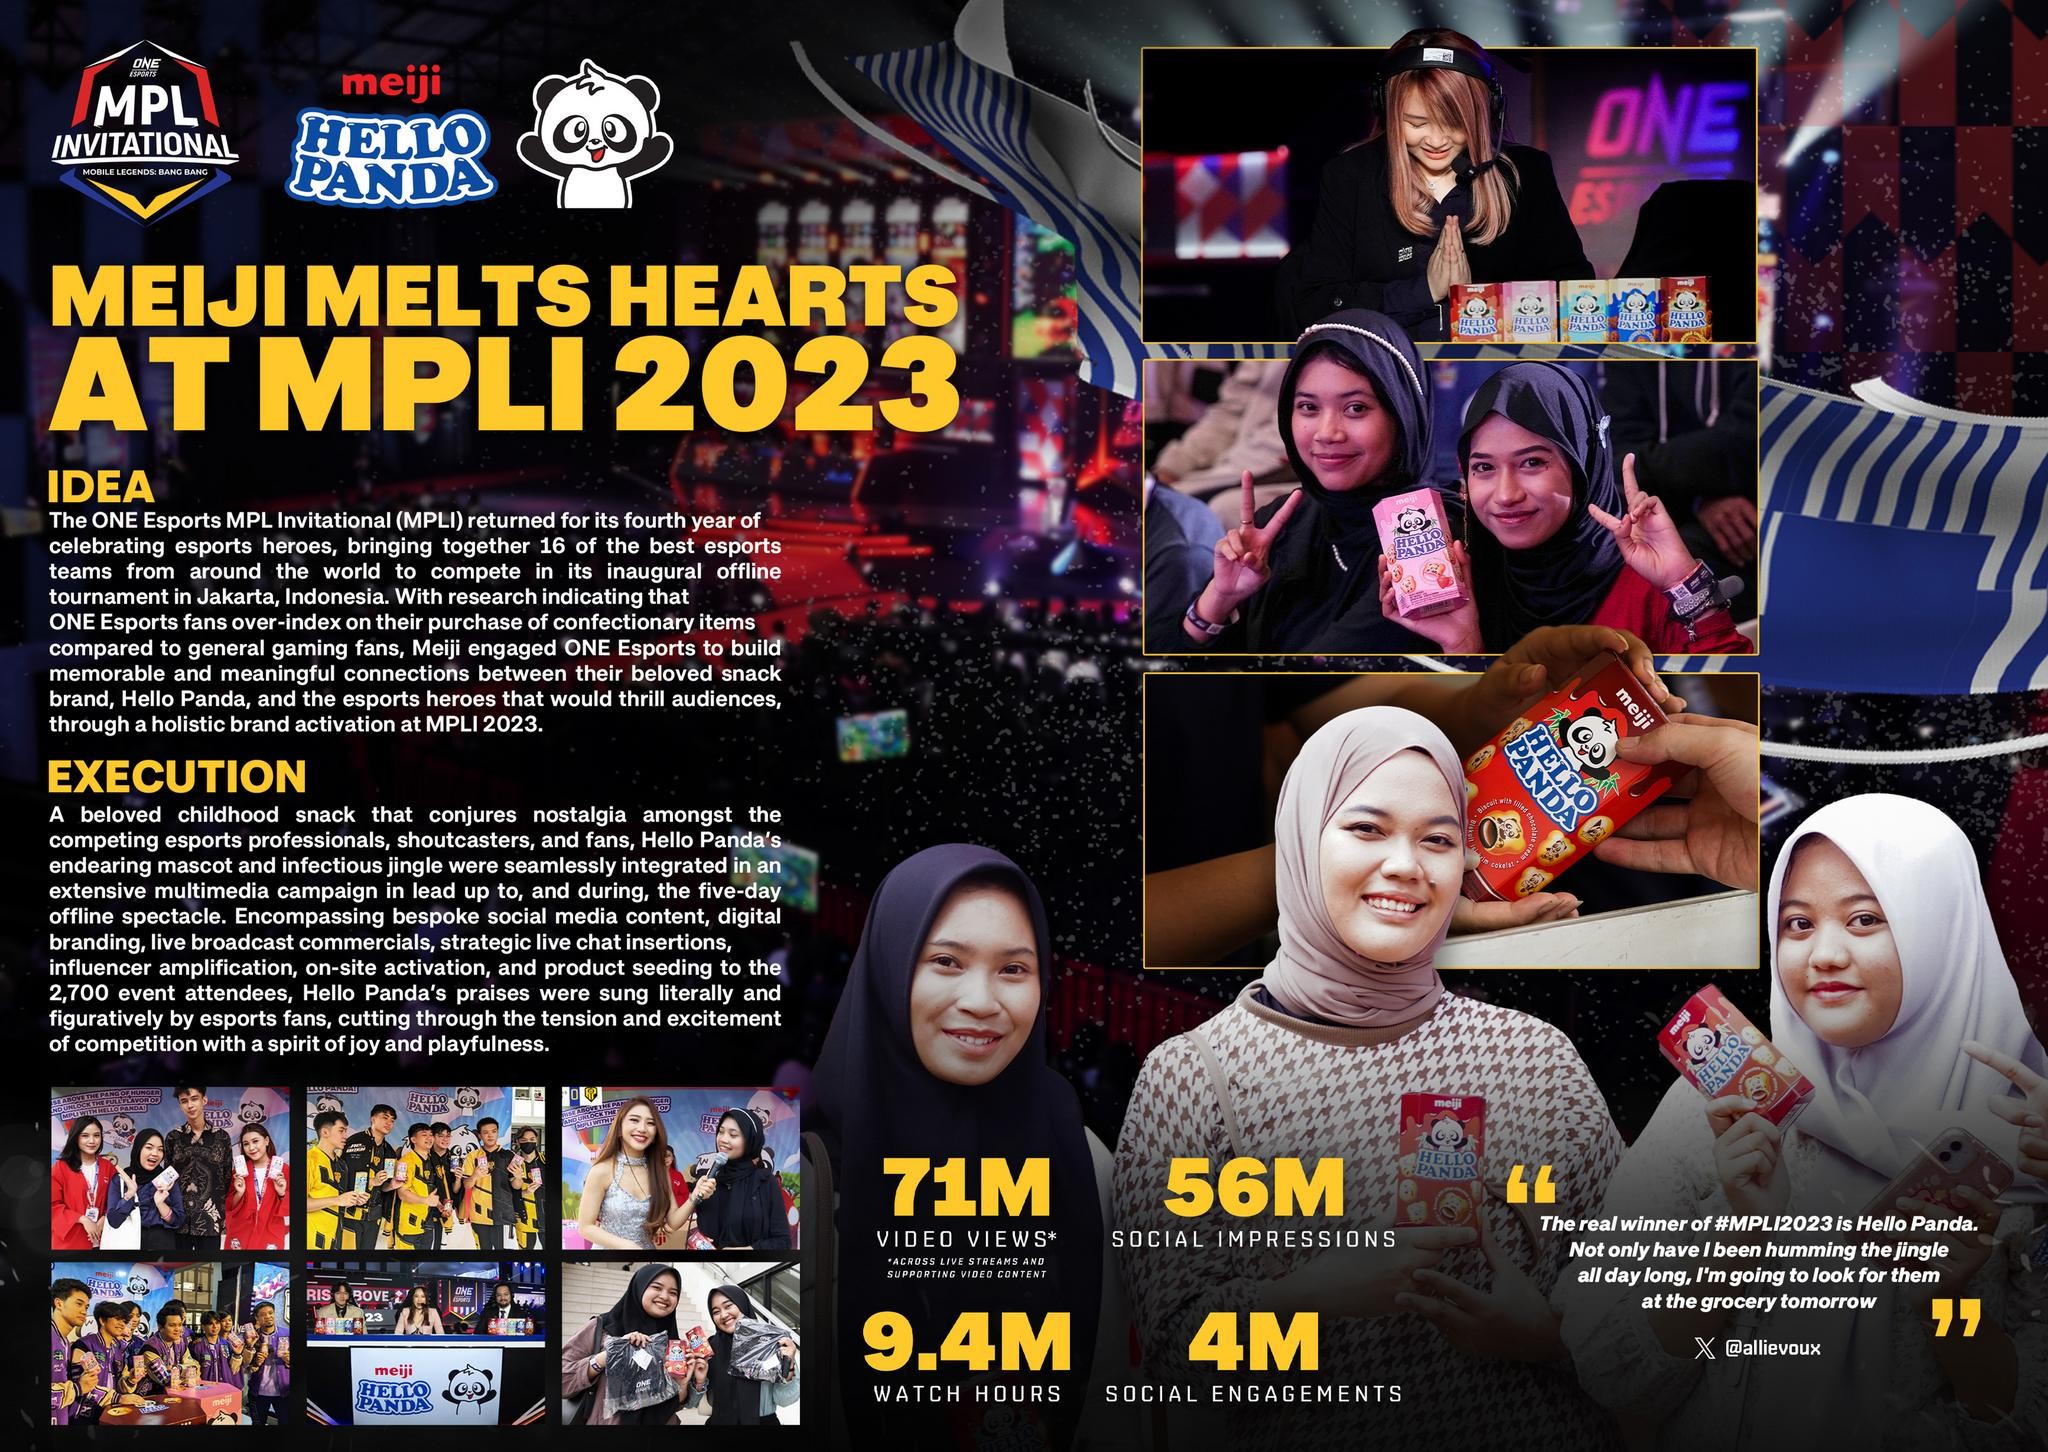 Meiji Melts Hearts at MPLI 2023